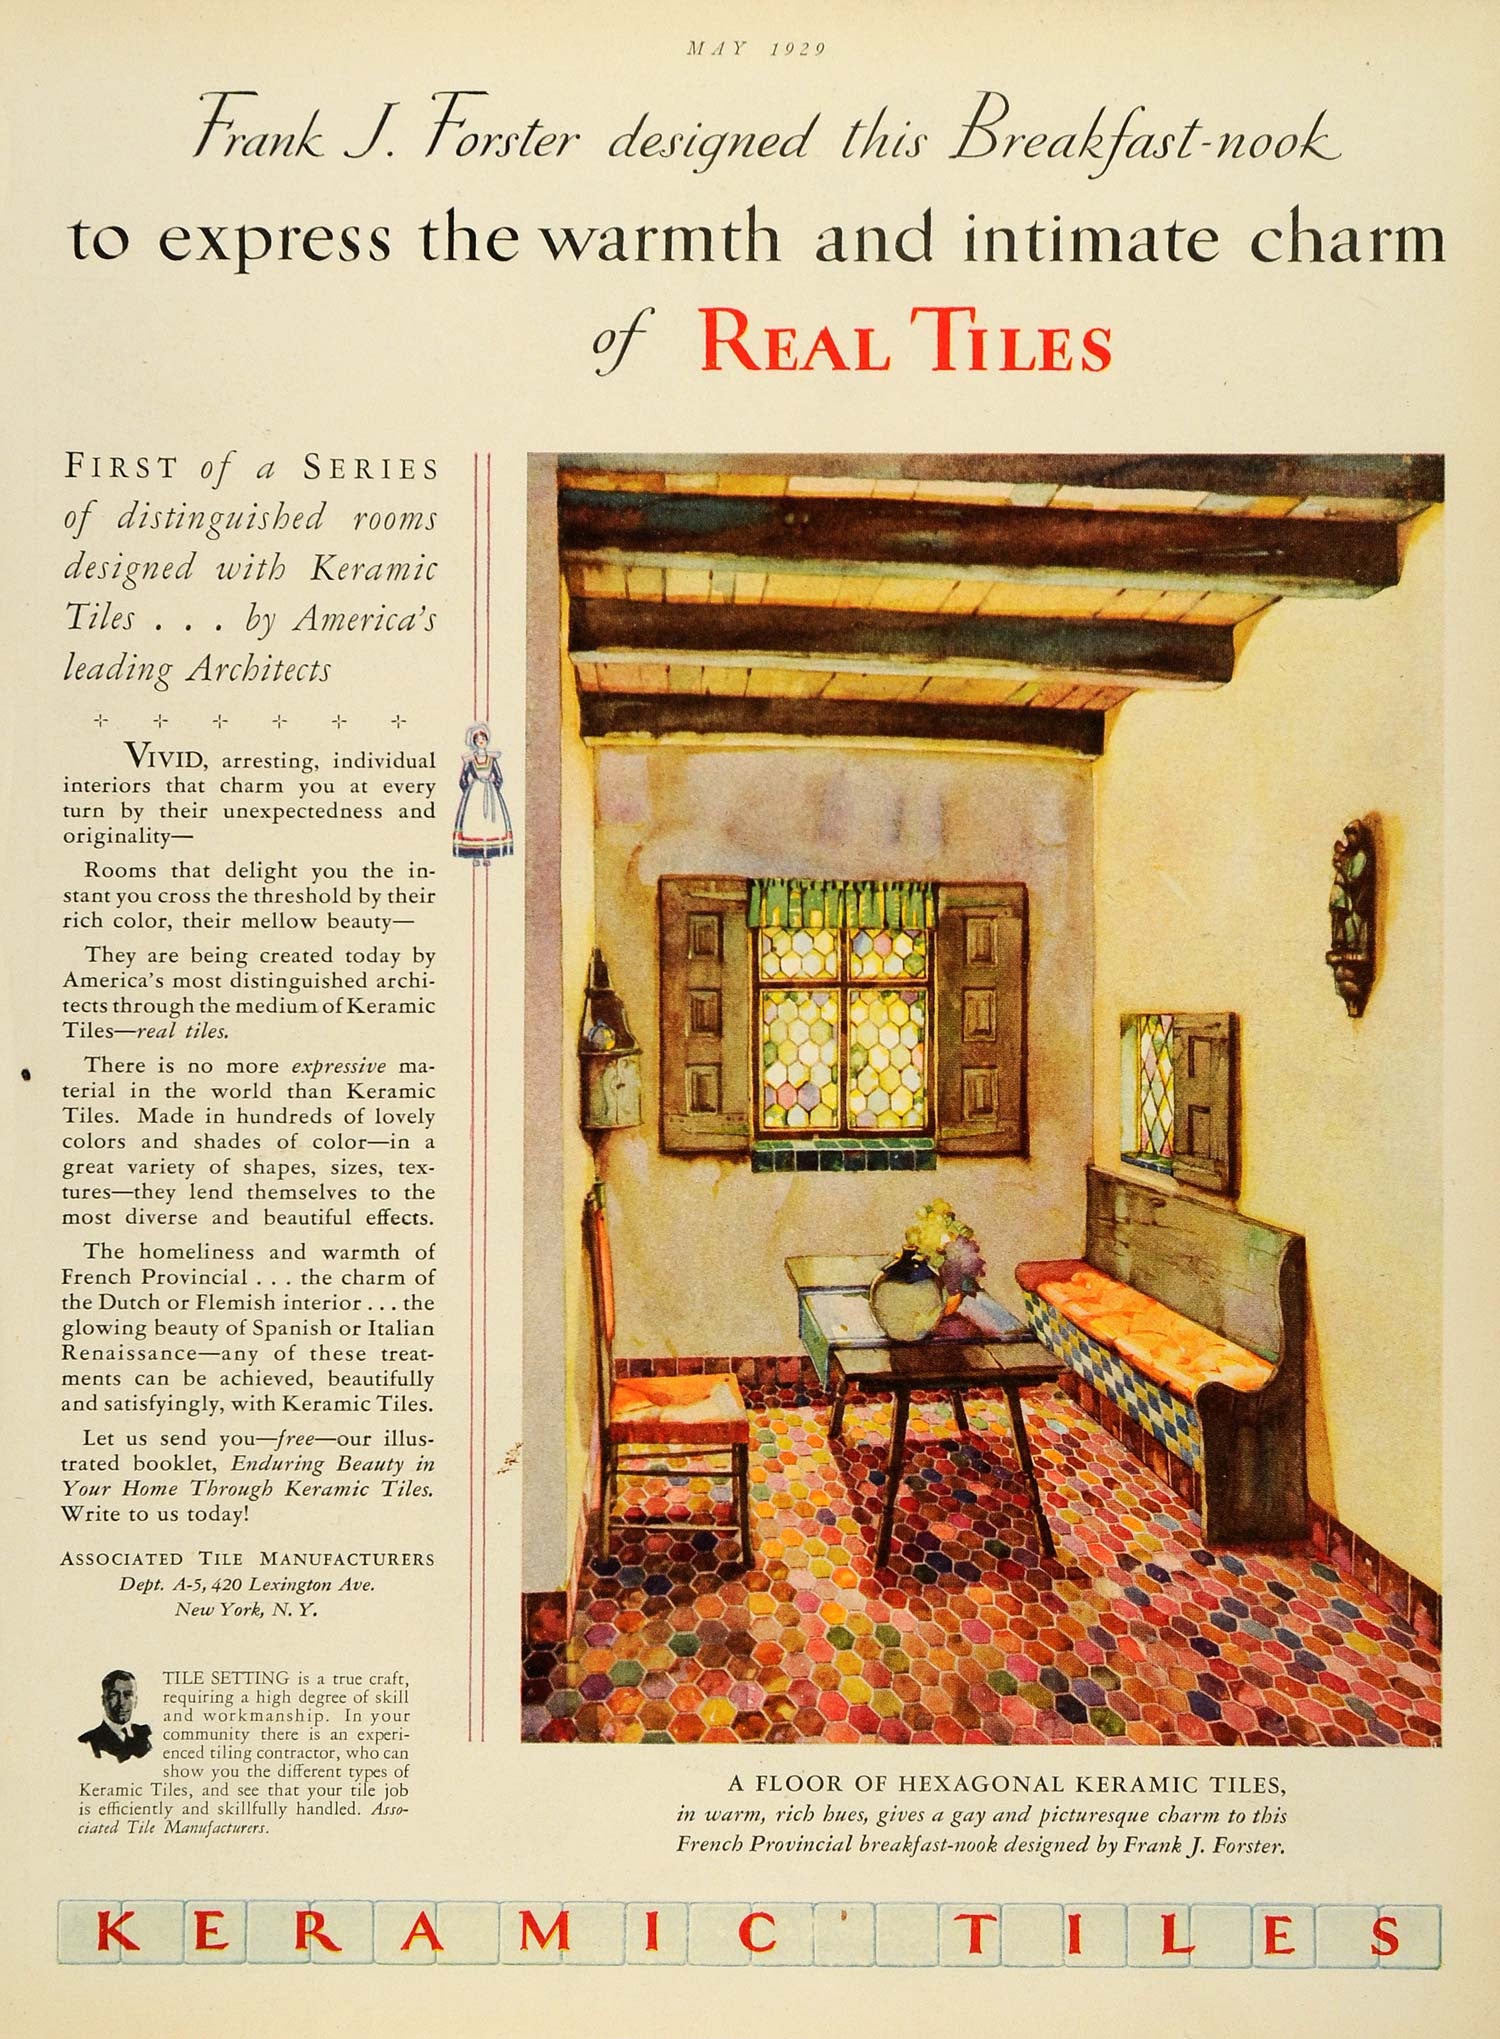 1929 Ad Keramic Tiles Flooring Home Decor Frank Forster New York Breakfast HB2 - Period Paper
